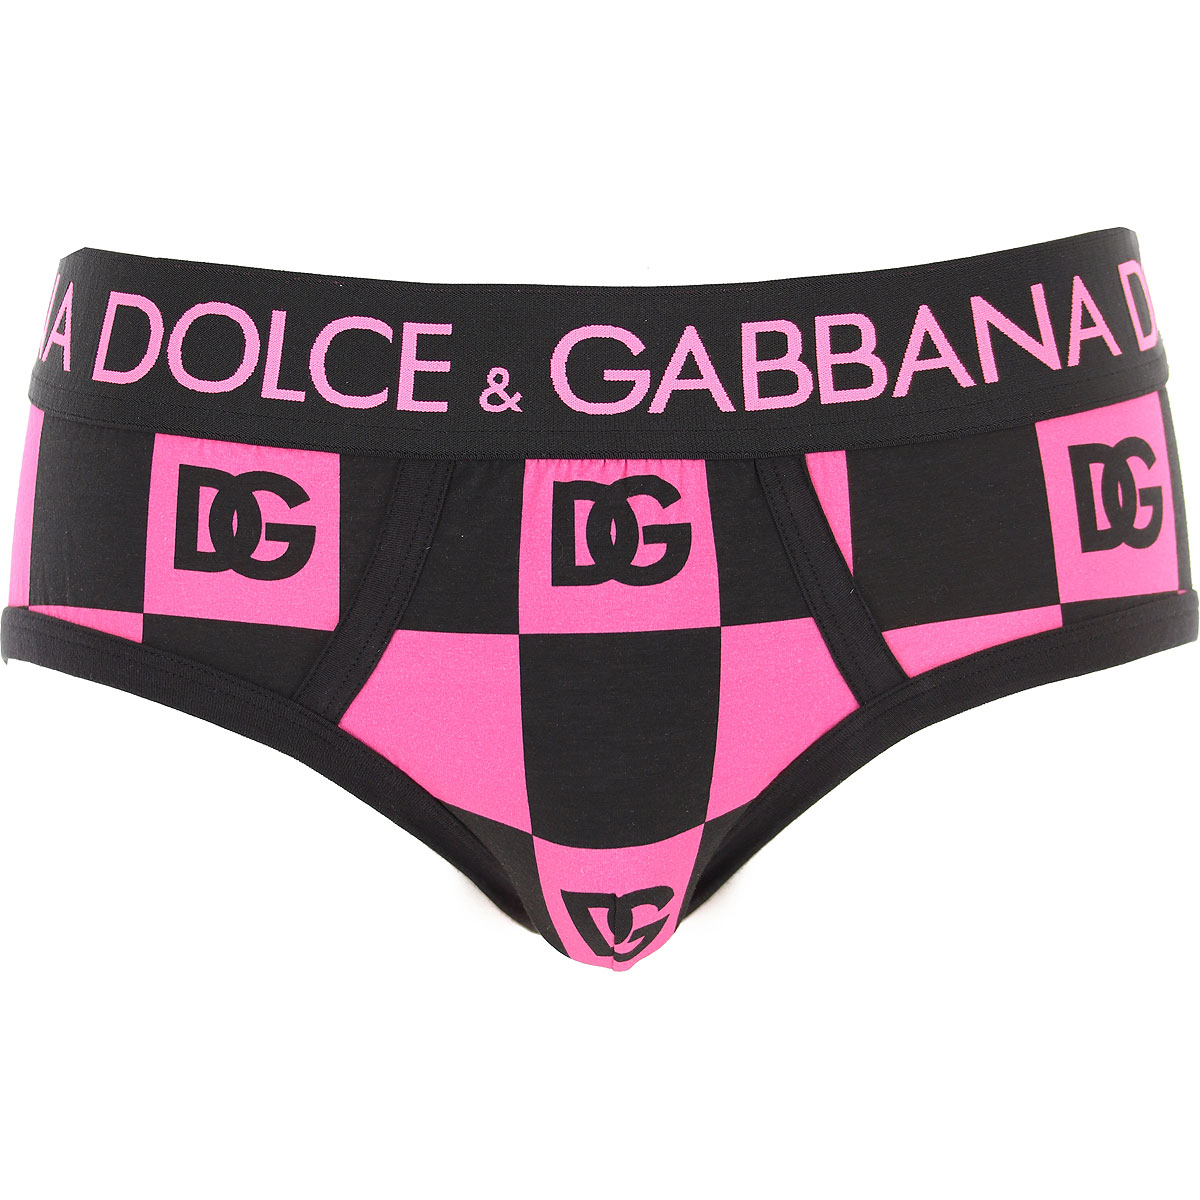 Mens Underwear Dolce & Gabbana, Style code: m3d81j-fseh2-he4cg